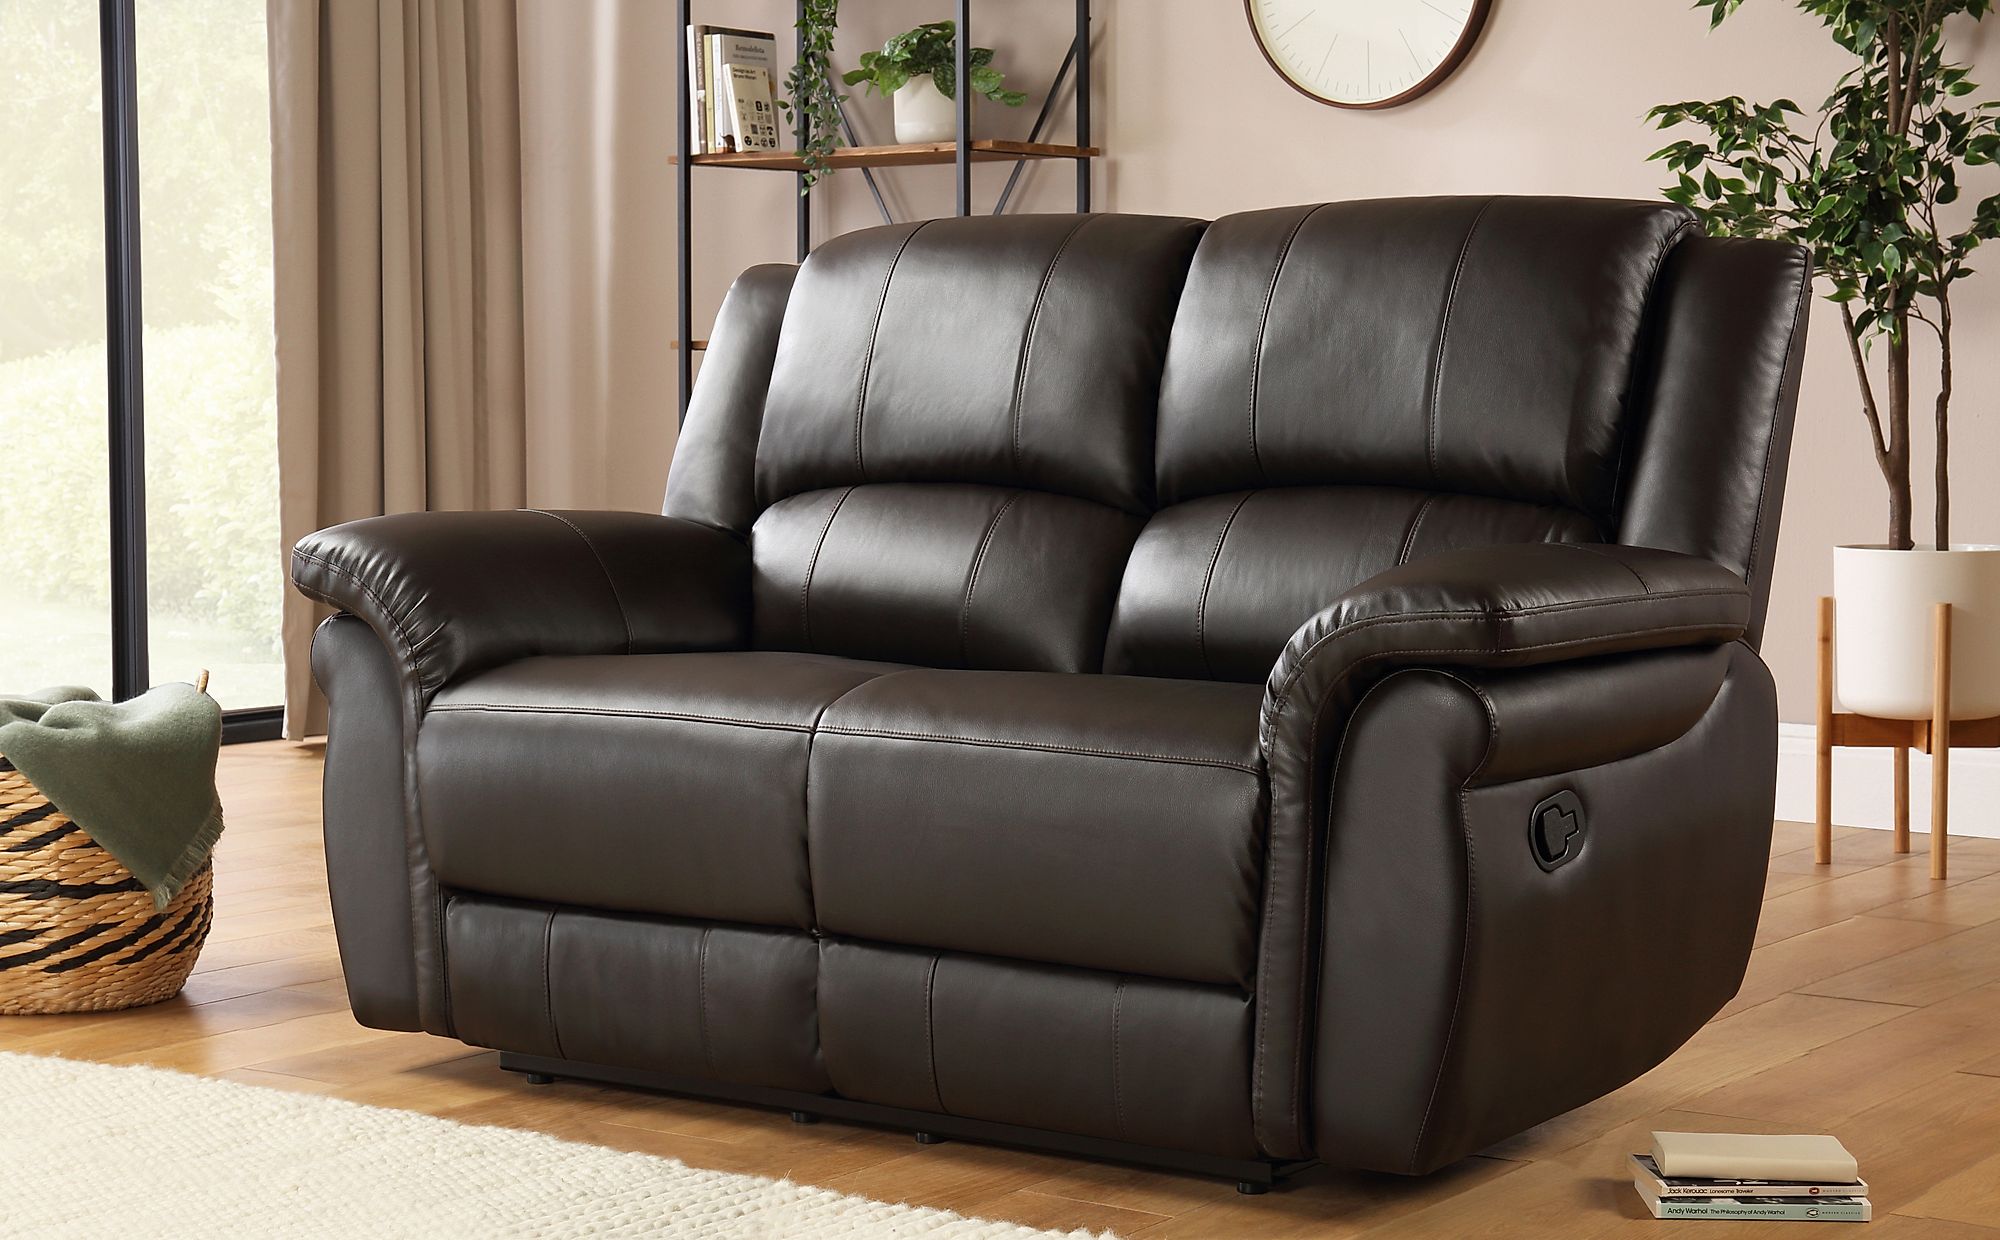 leather recliner sofa set india